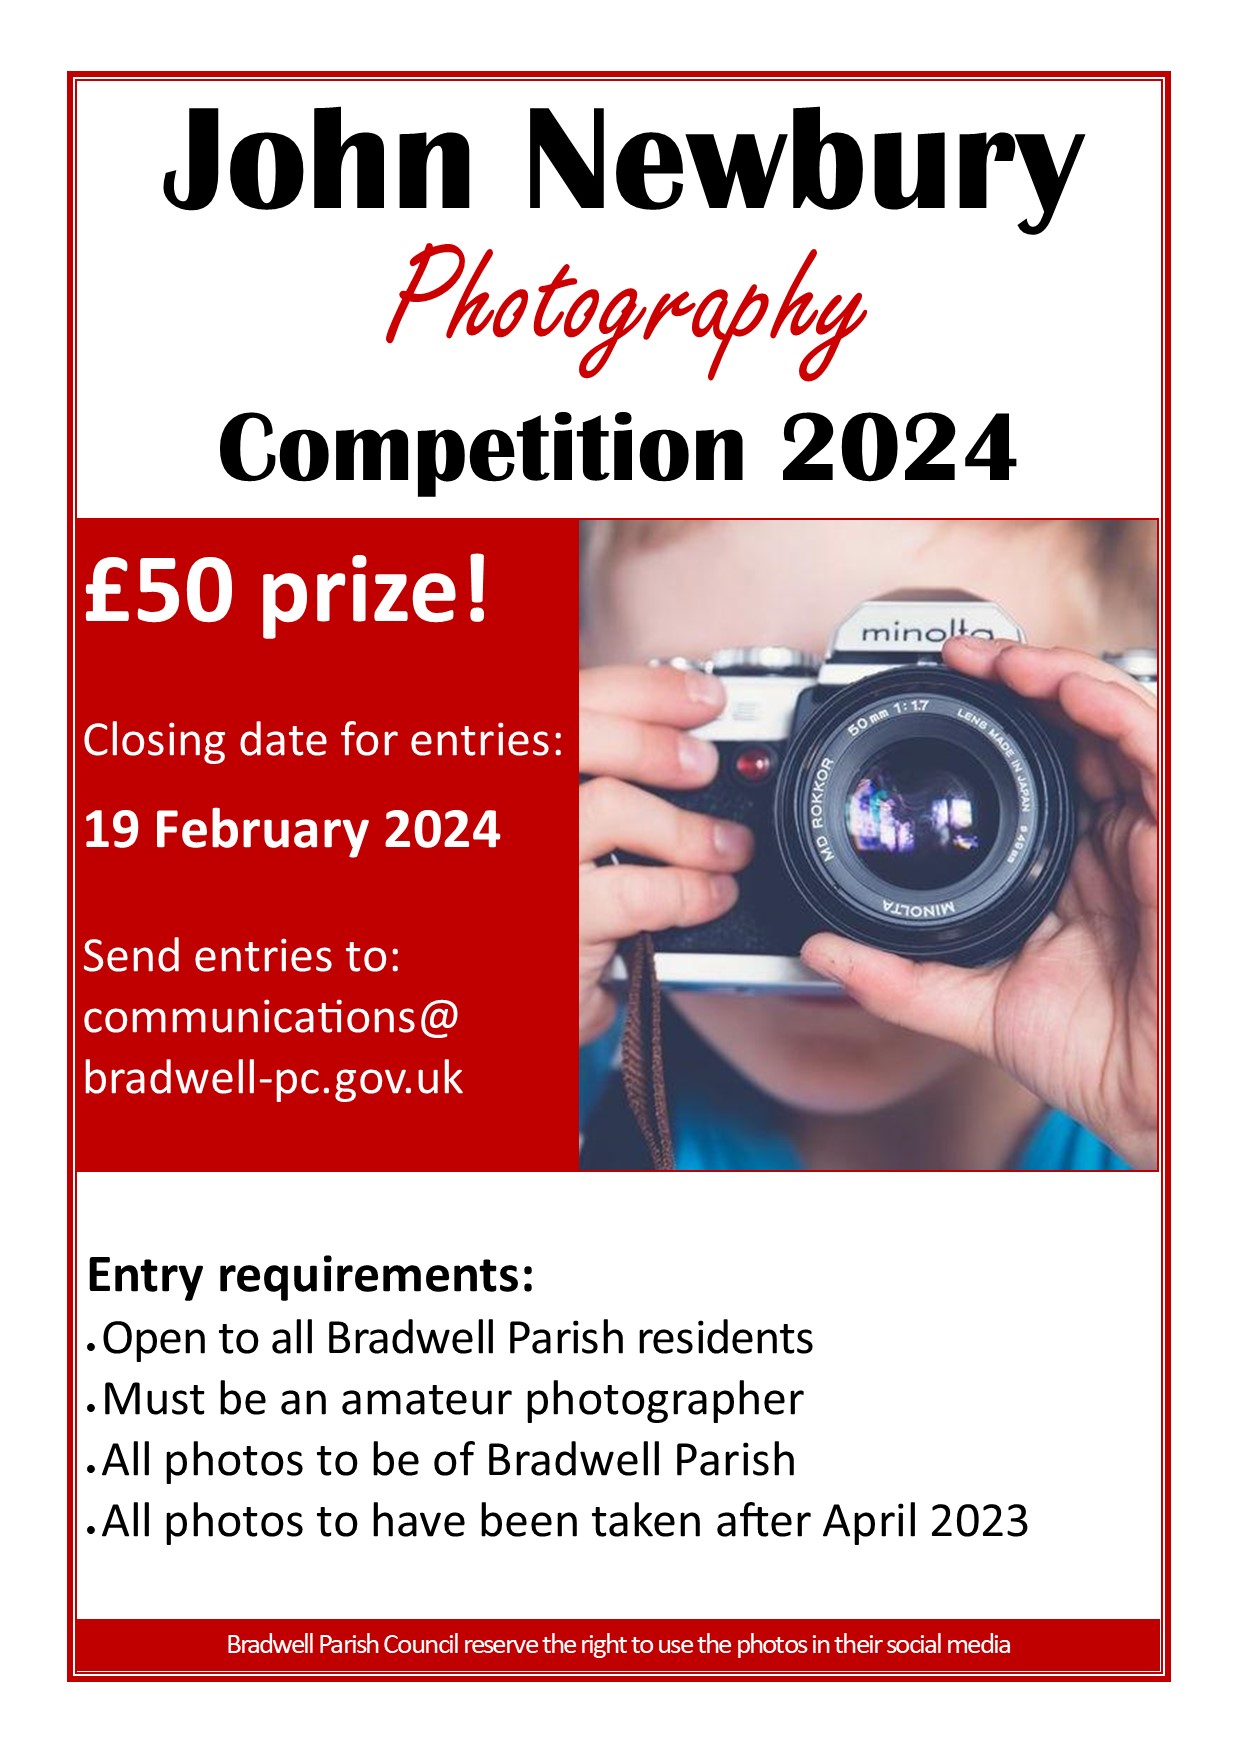 John Newbury Photography Competition 2024